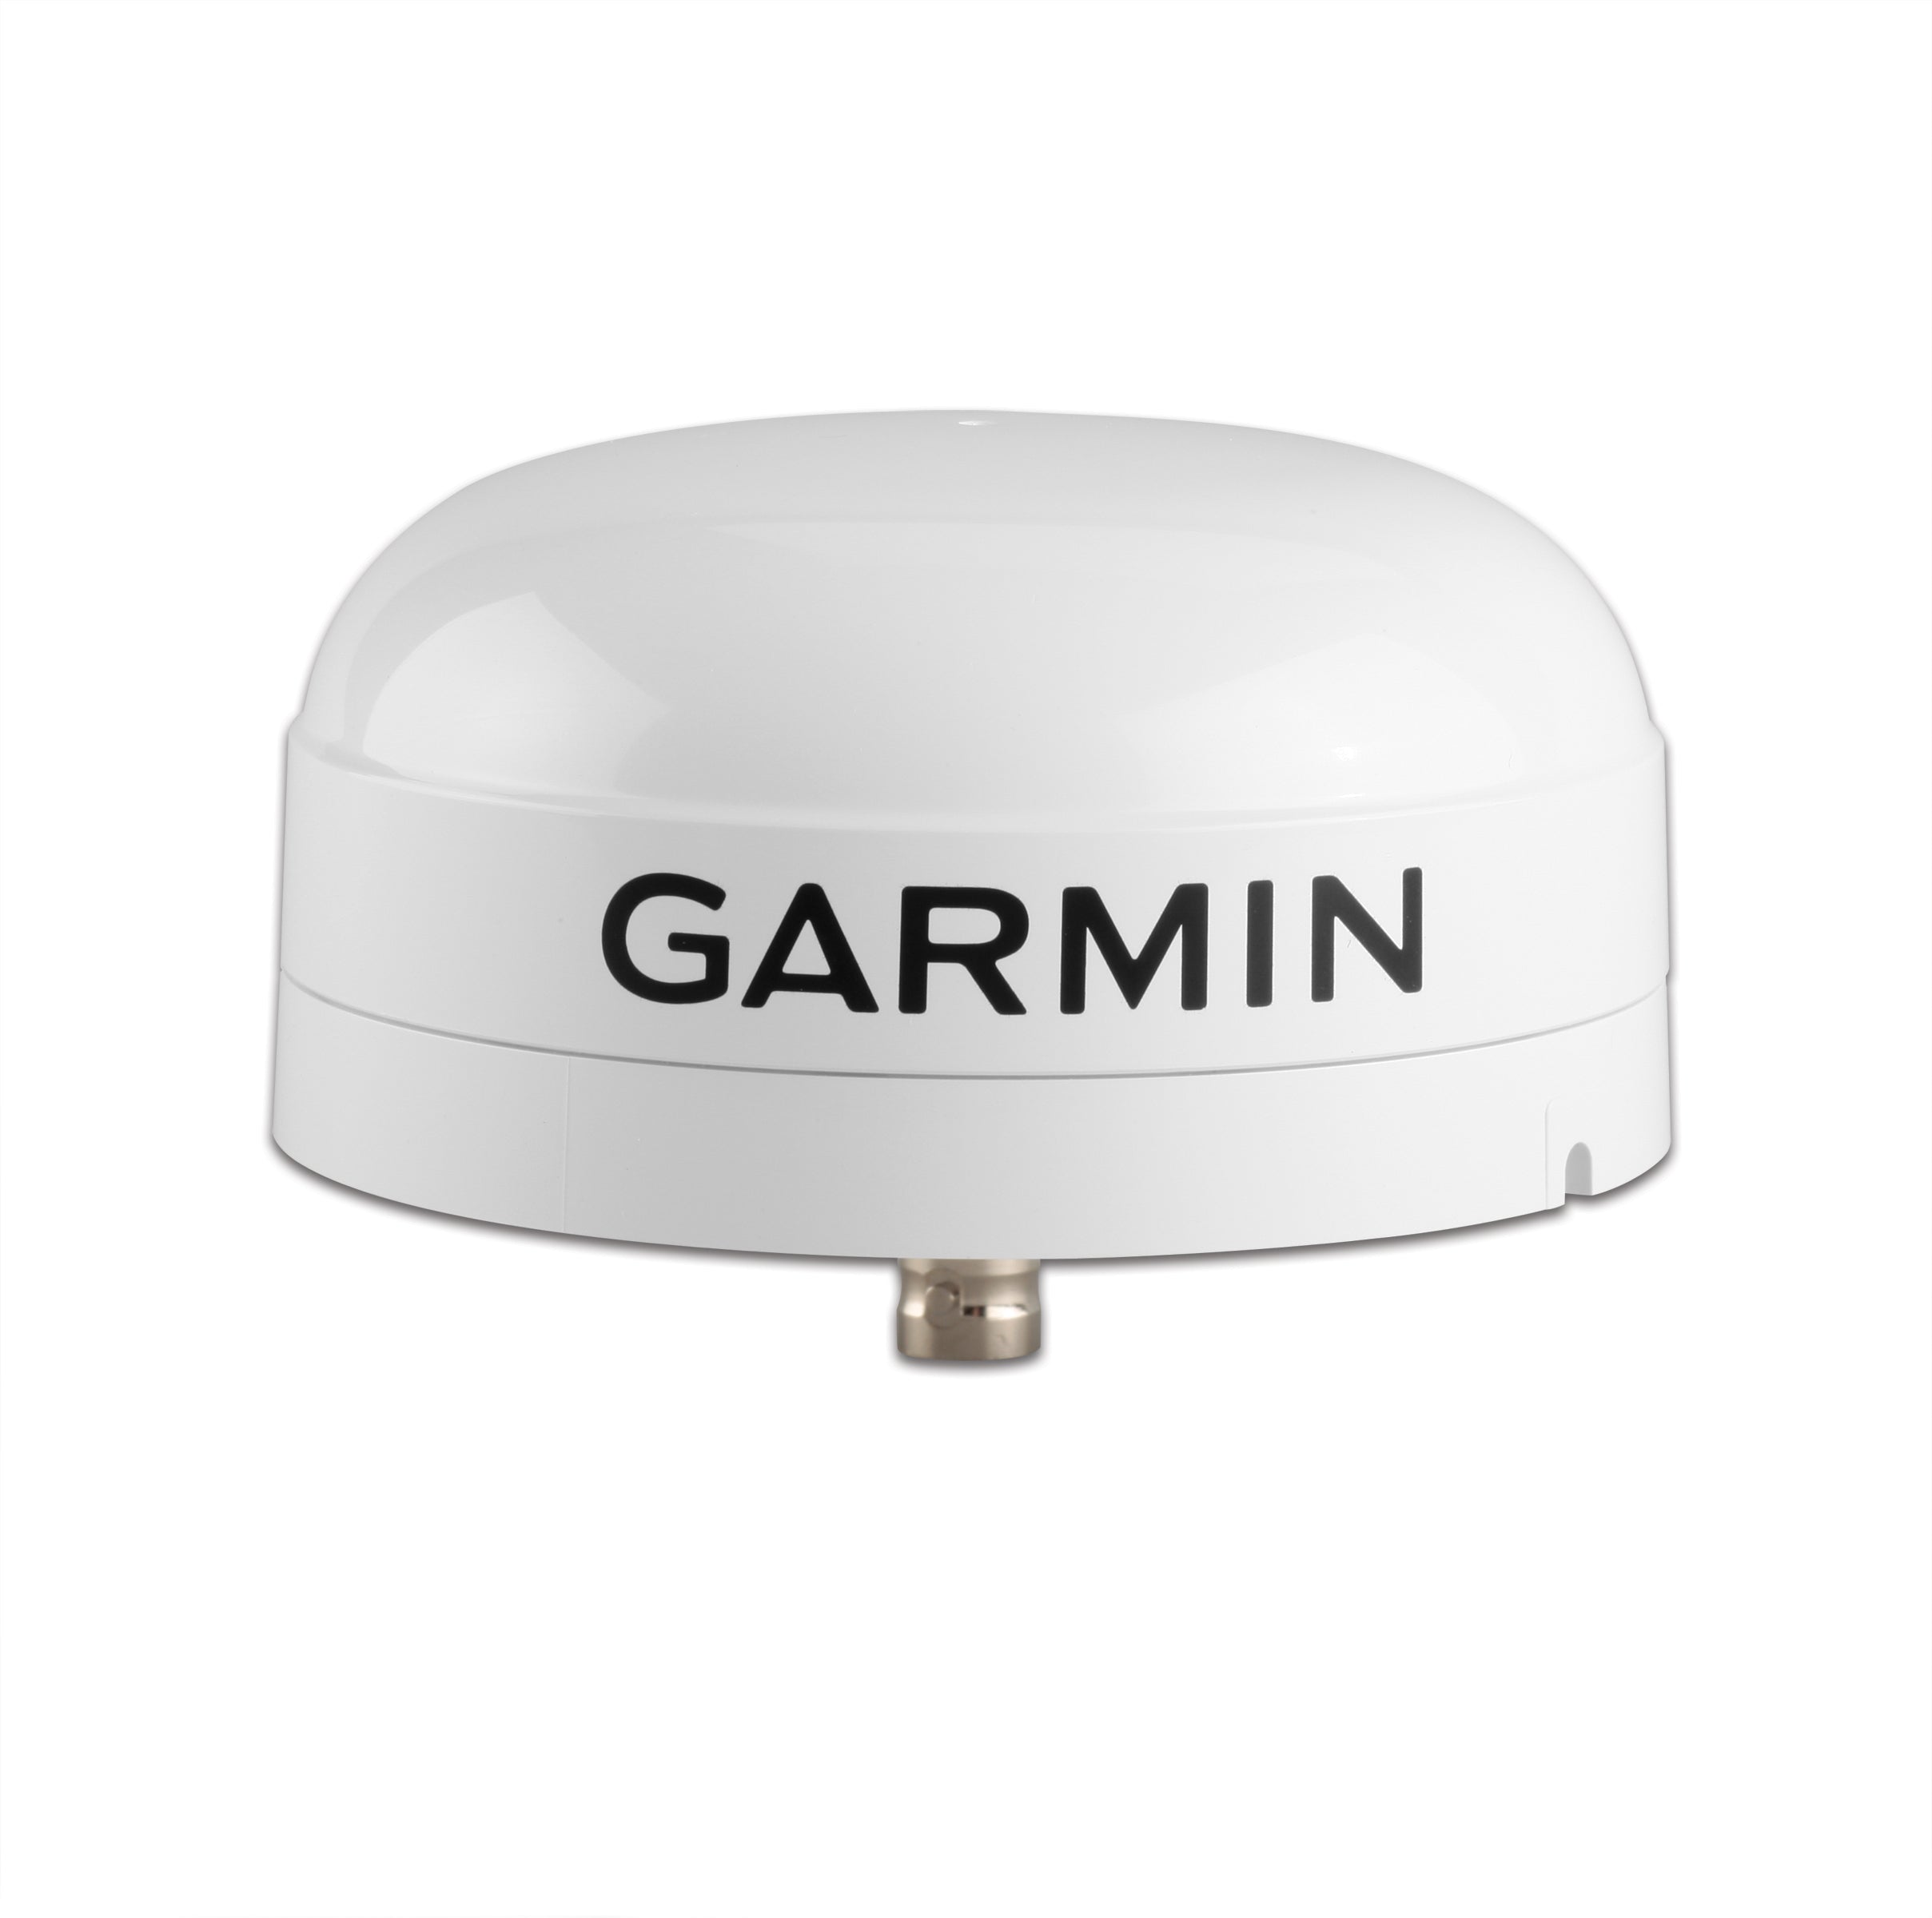 Garmin GA™ 38 GPS and GLONASS antenna for Garmin VHF, AIS and chartplotters, white